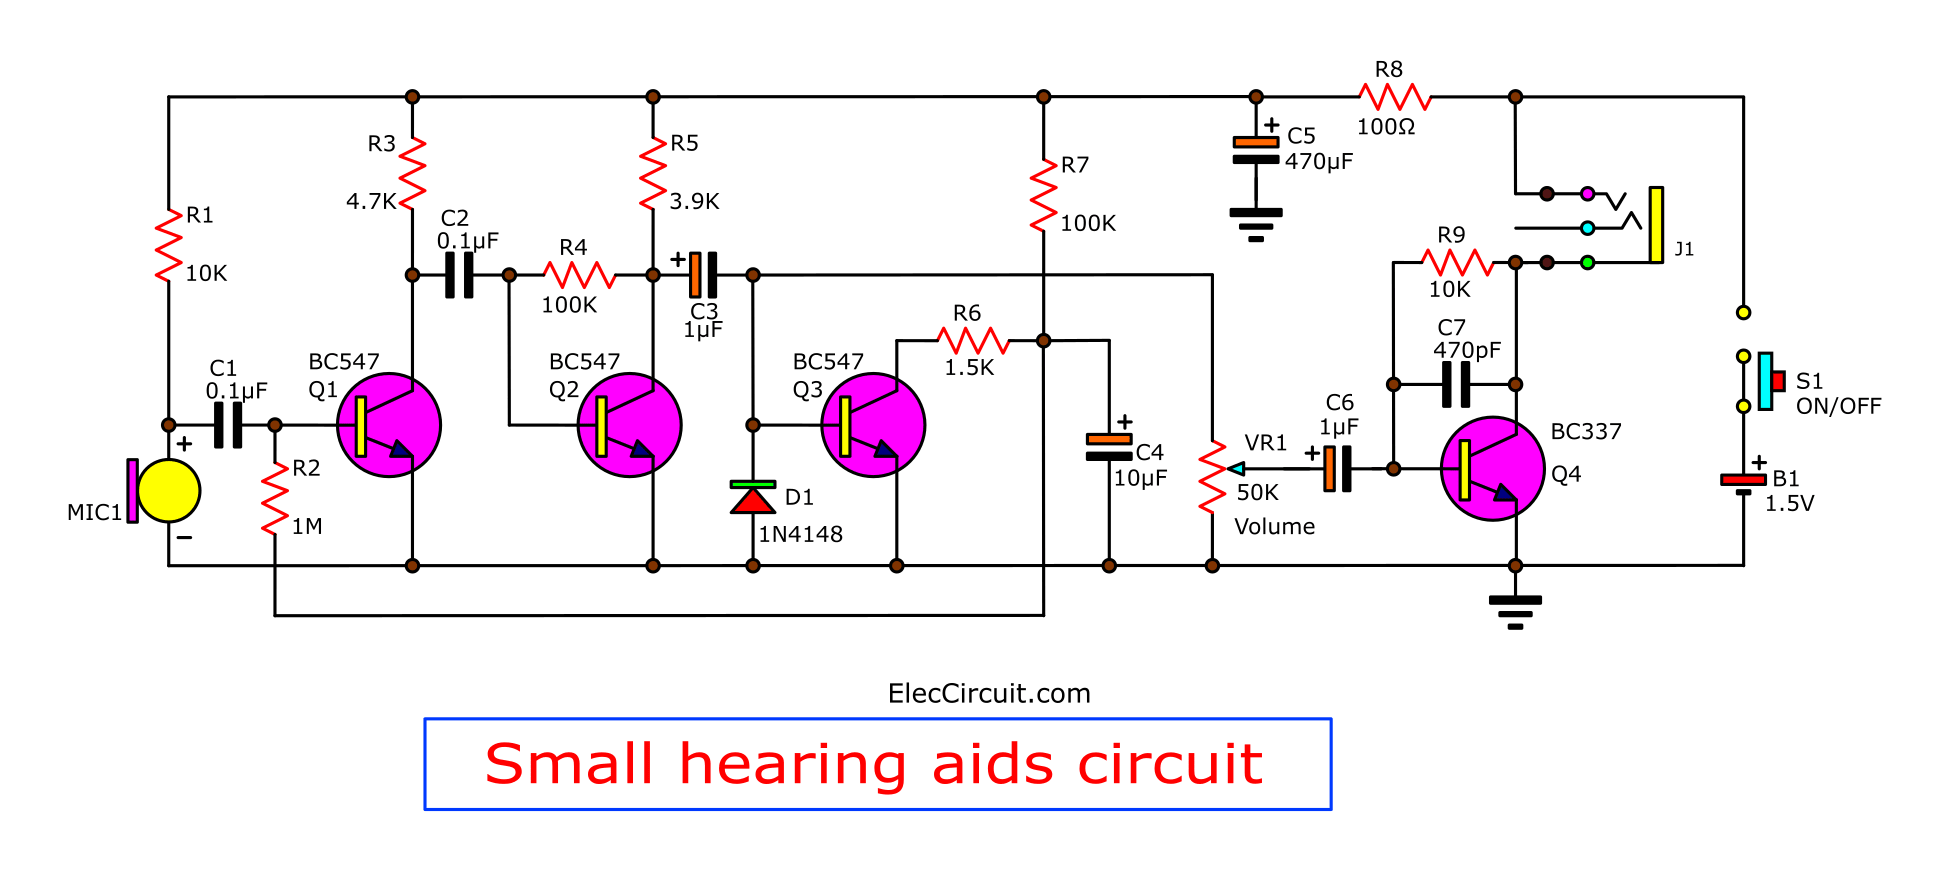 Ic 4558 Hearing Aid Circuit - The Cheap Small Hearing Aids Project - Ic 4558 Hearing Aid Circuit